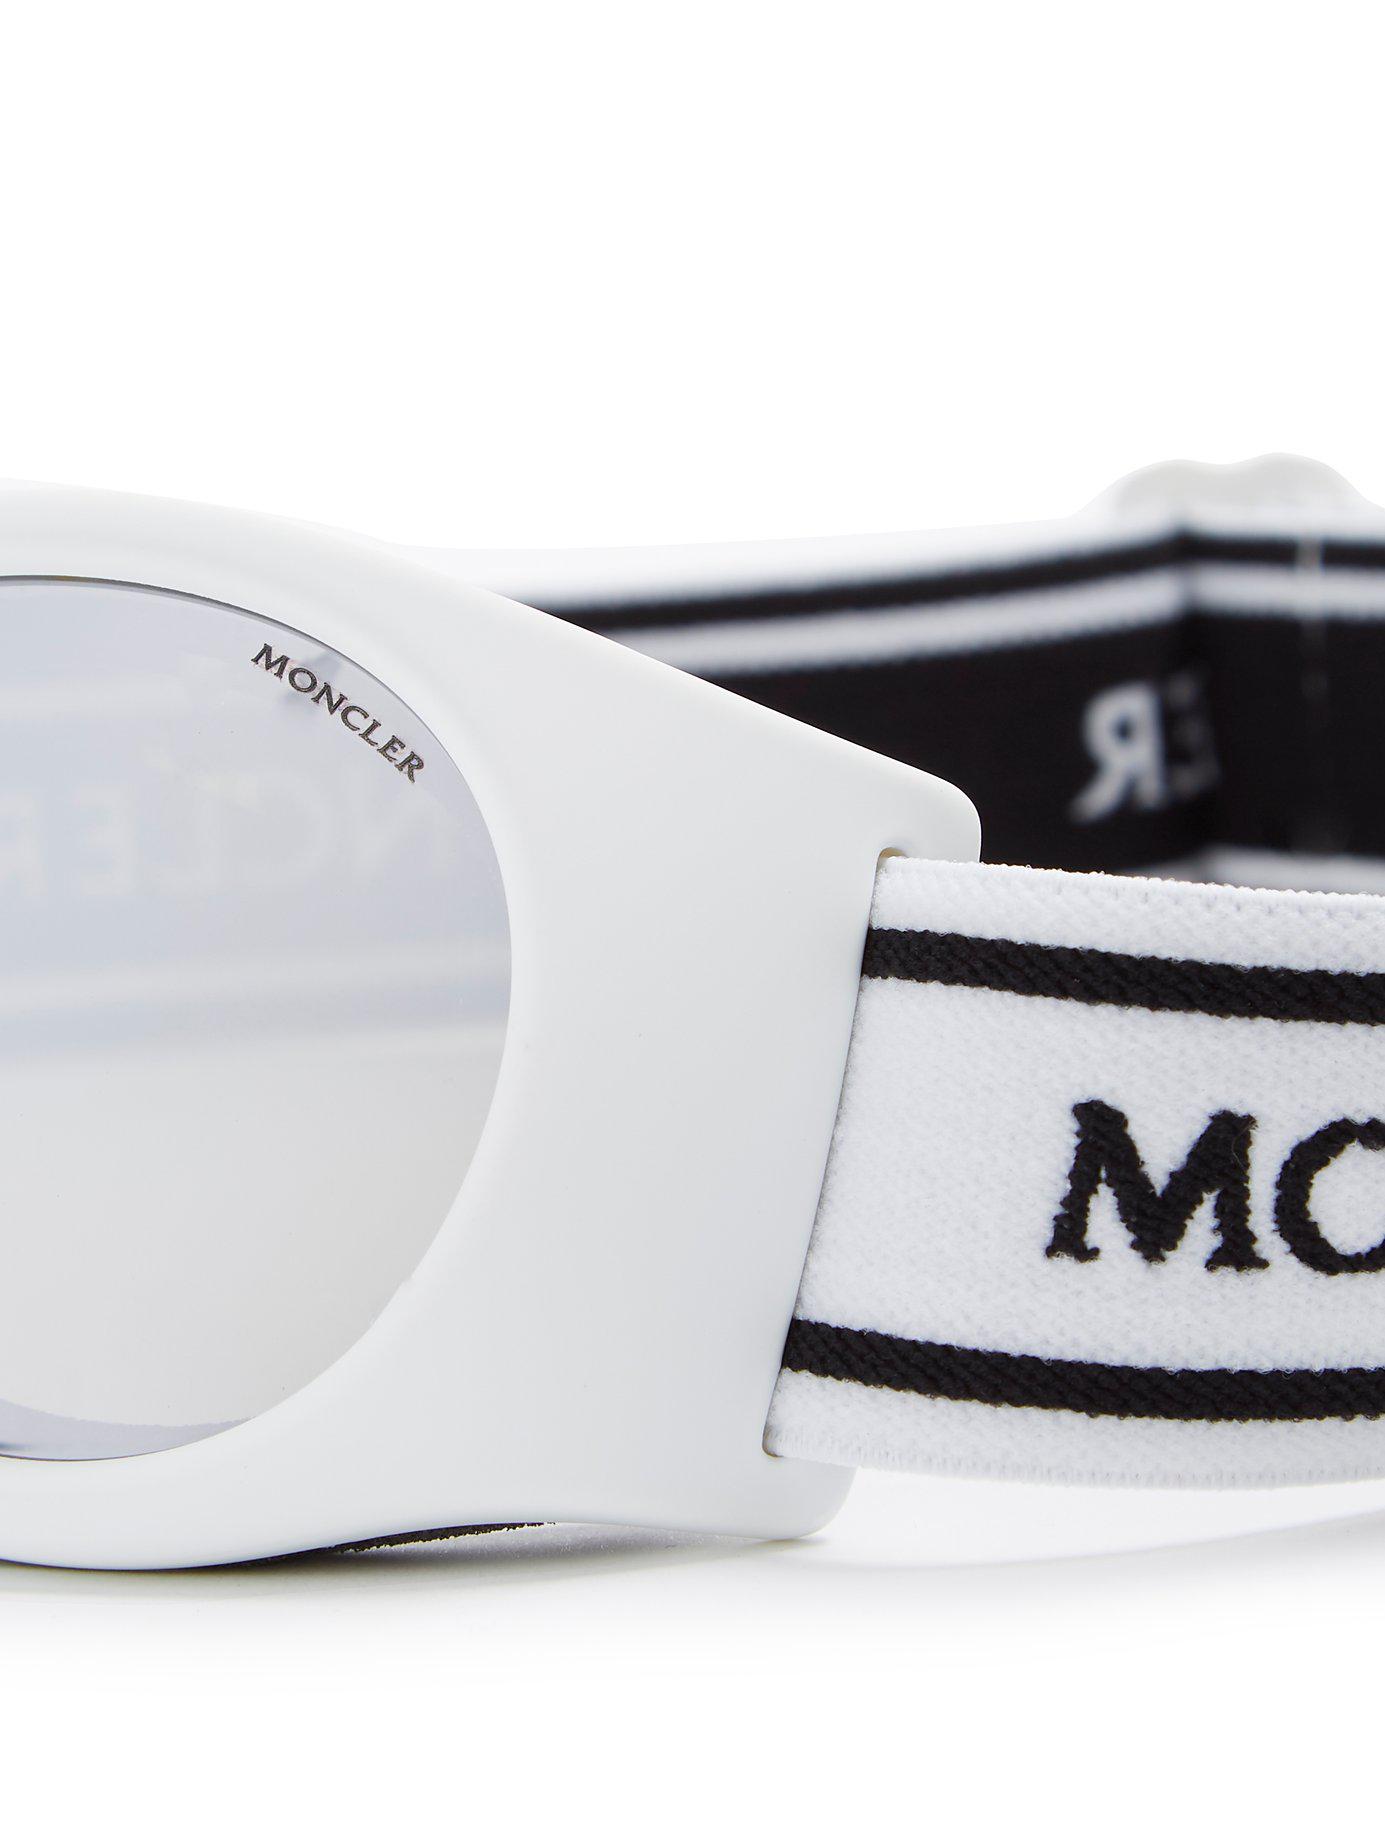 Moncler Round Frame Ski Goggles - Mens - Black